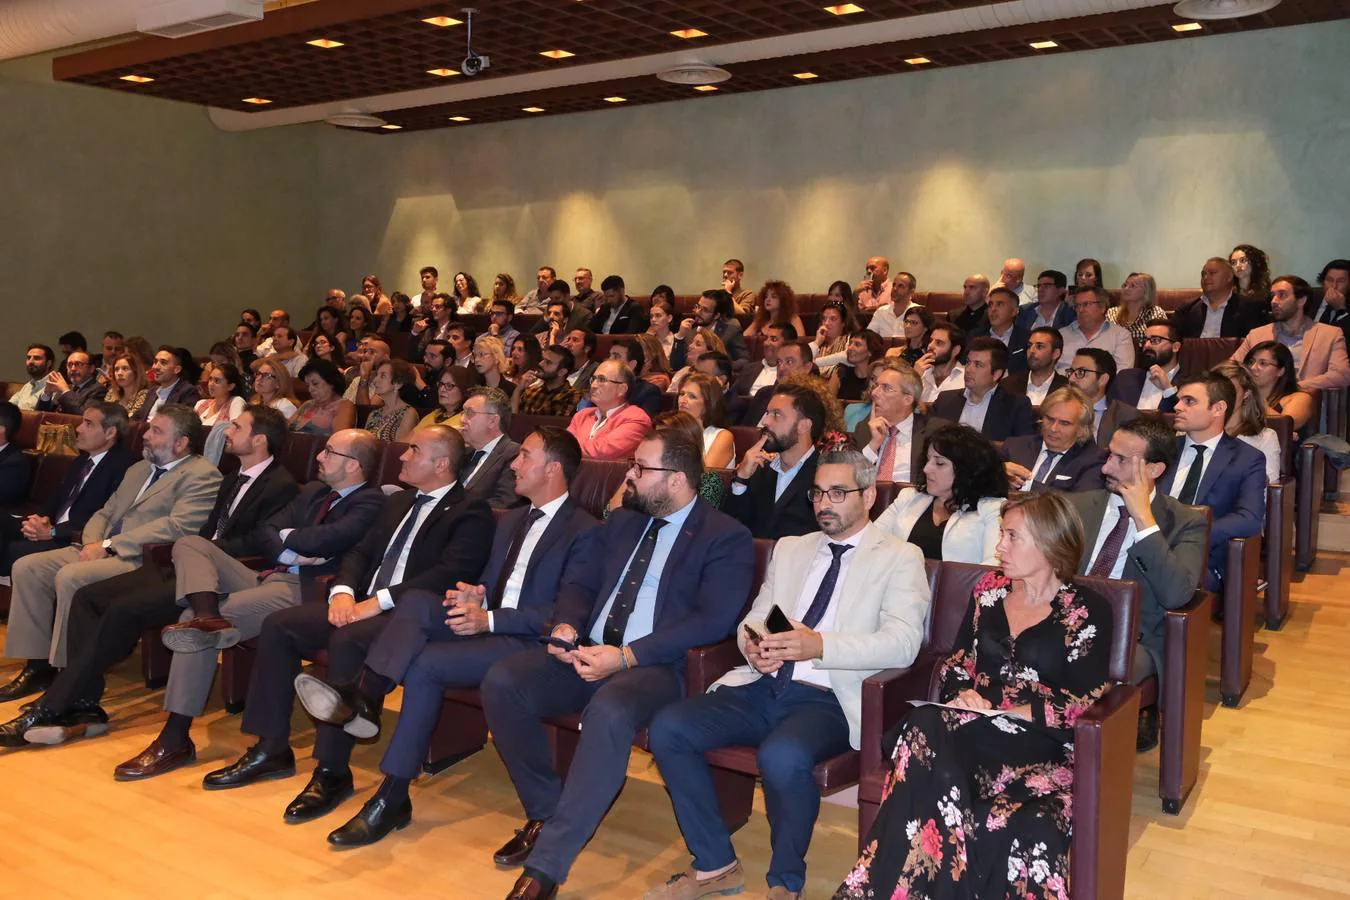 En imágenes: Premios Cádizes_digital 2019